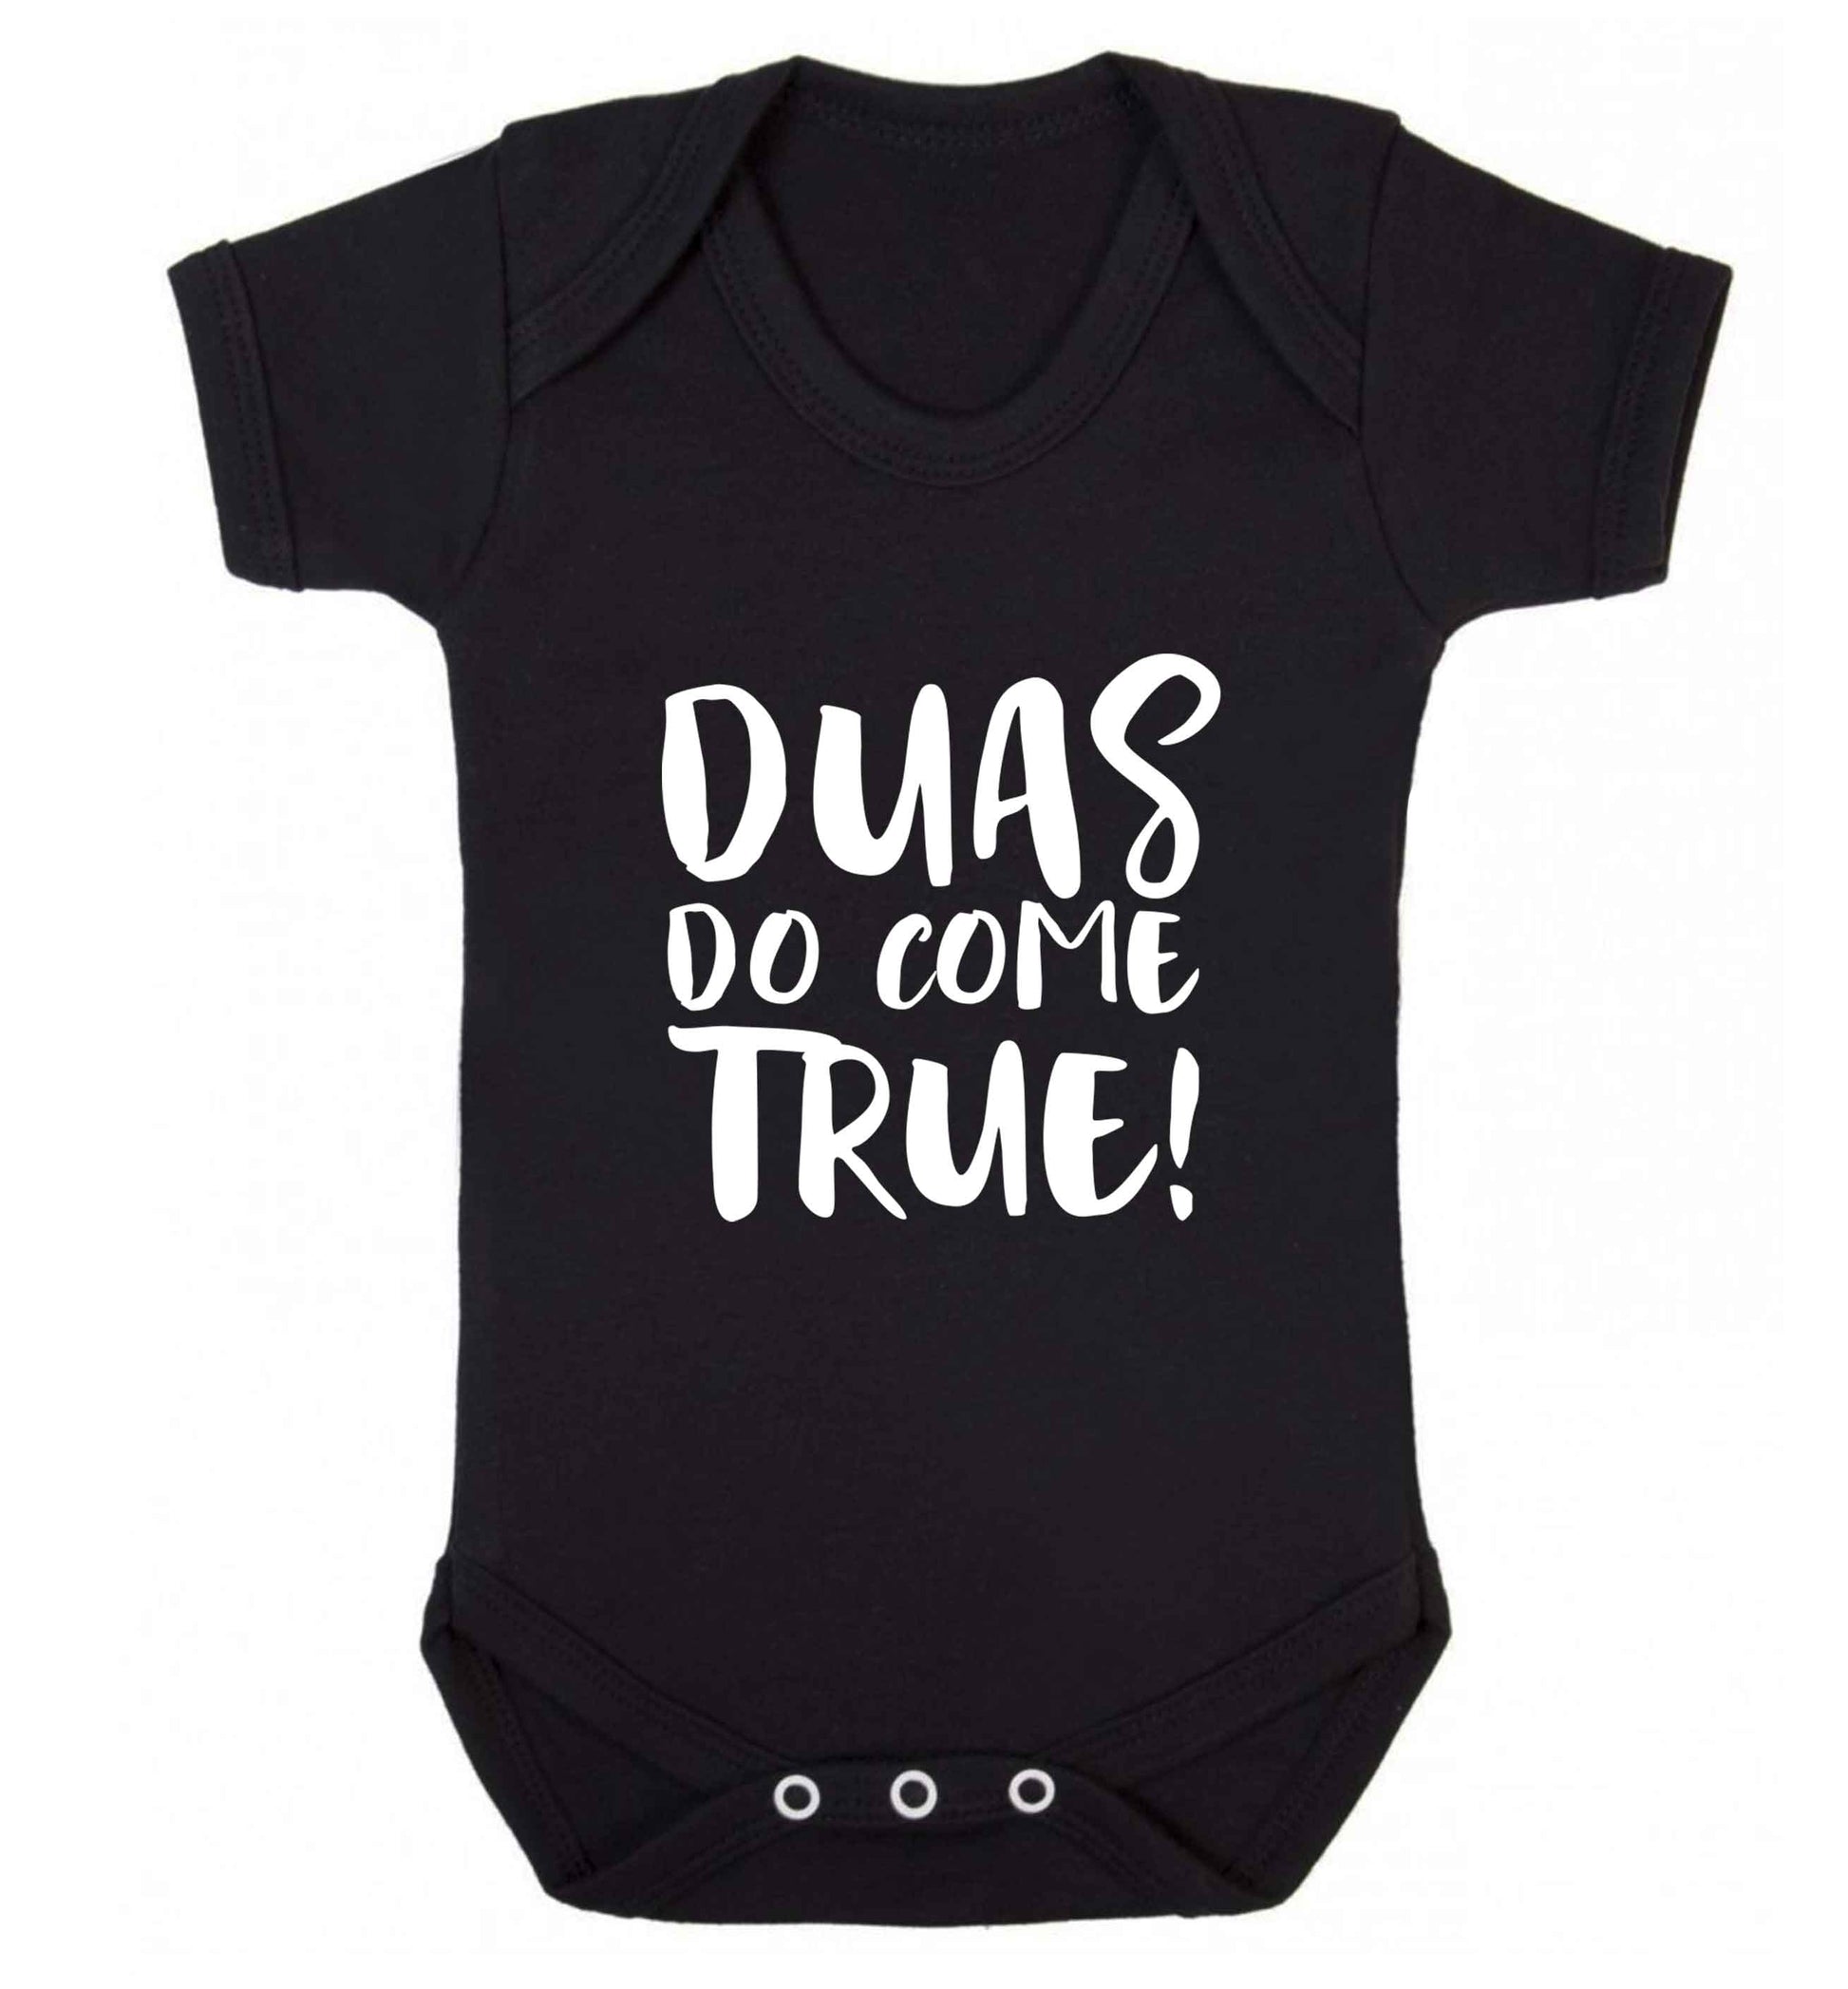 Duas do come true baby vest black 18-24 months